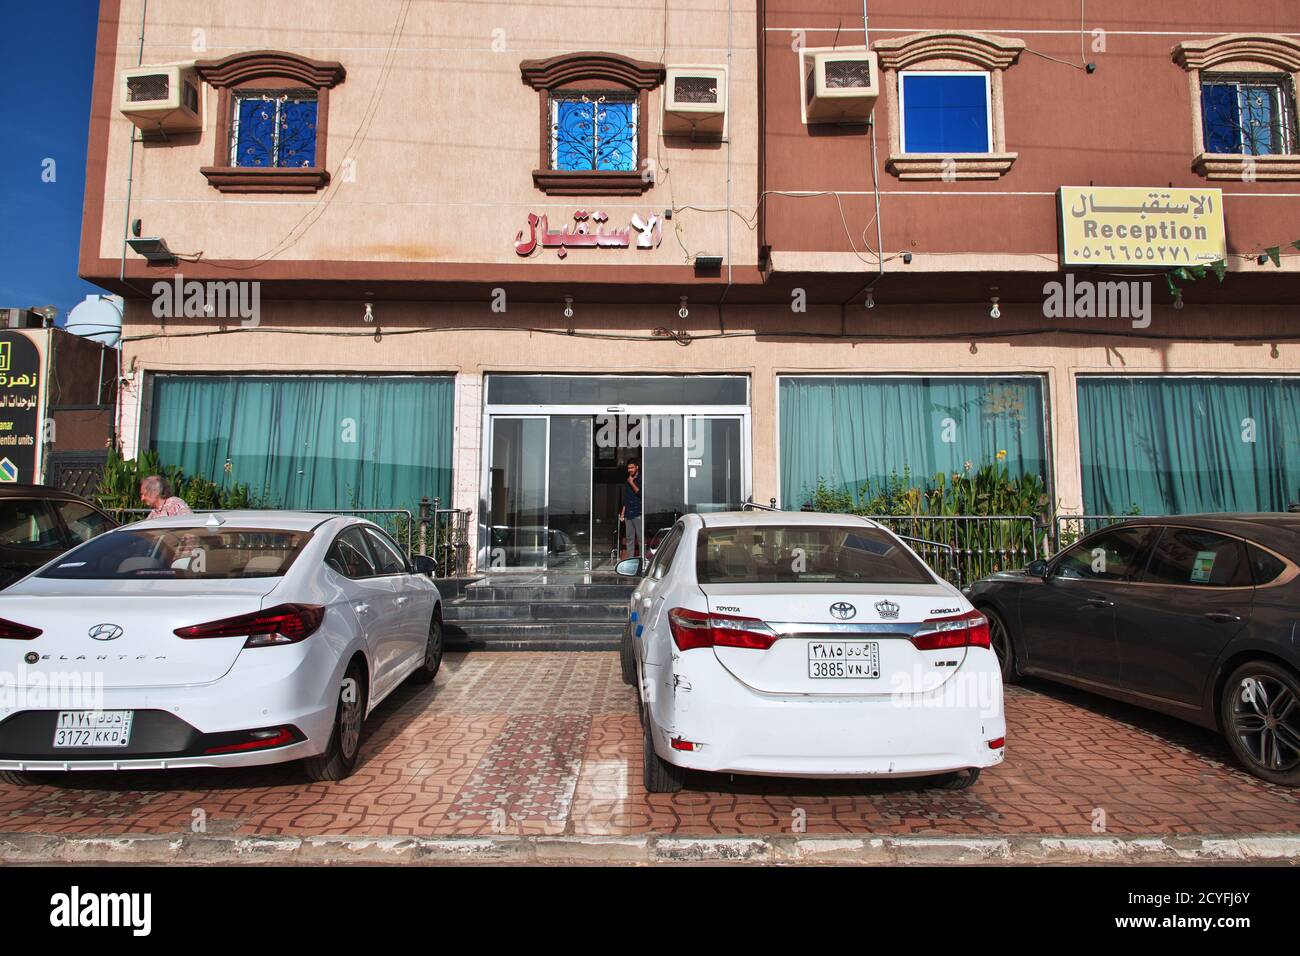 The hotel in Al Bahah, Saudi Arabia Stock Photo